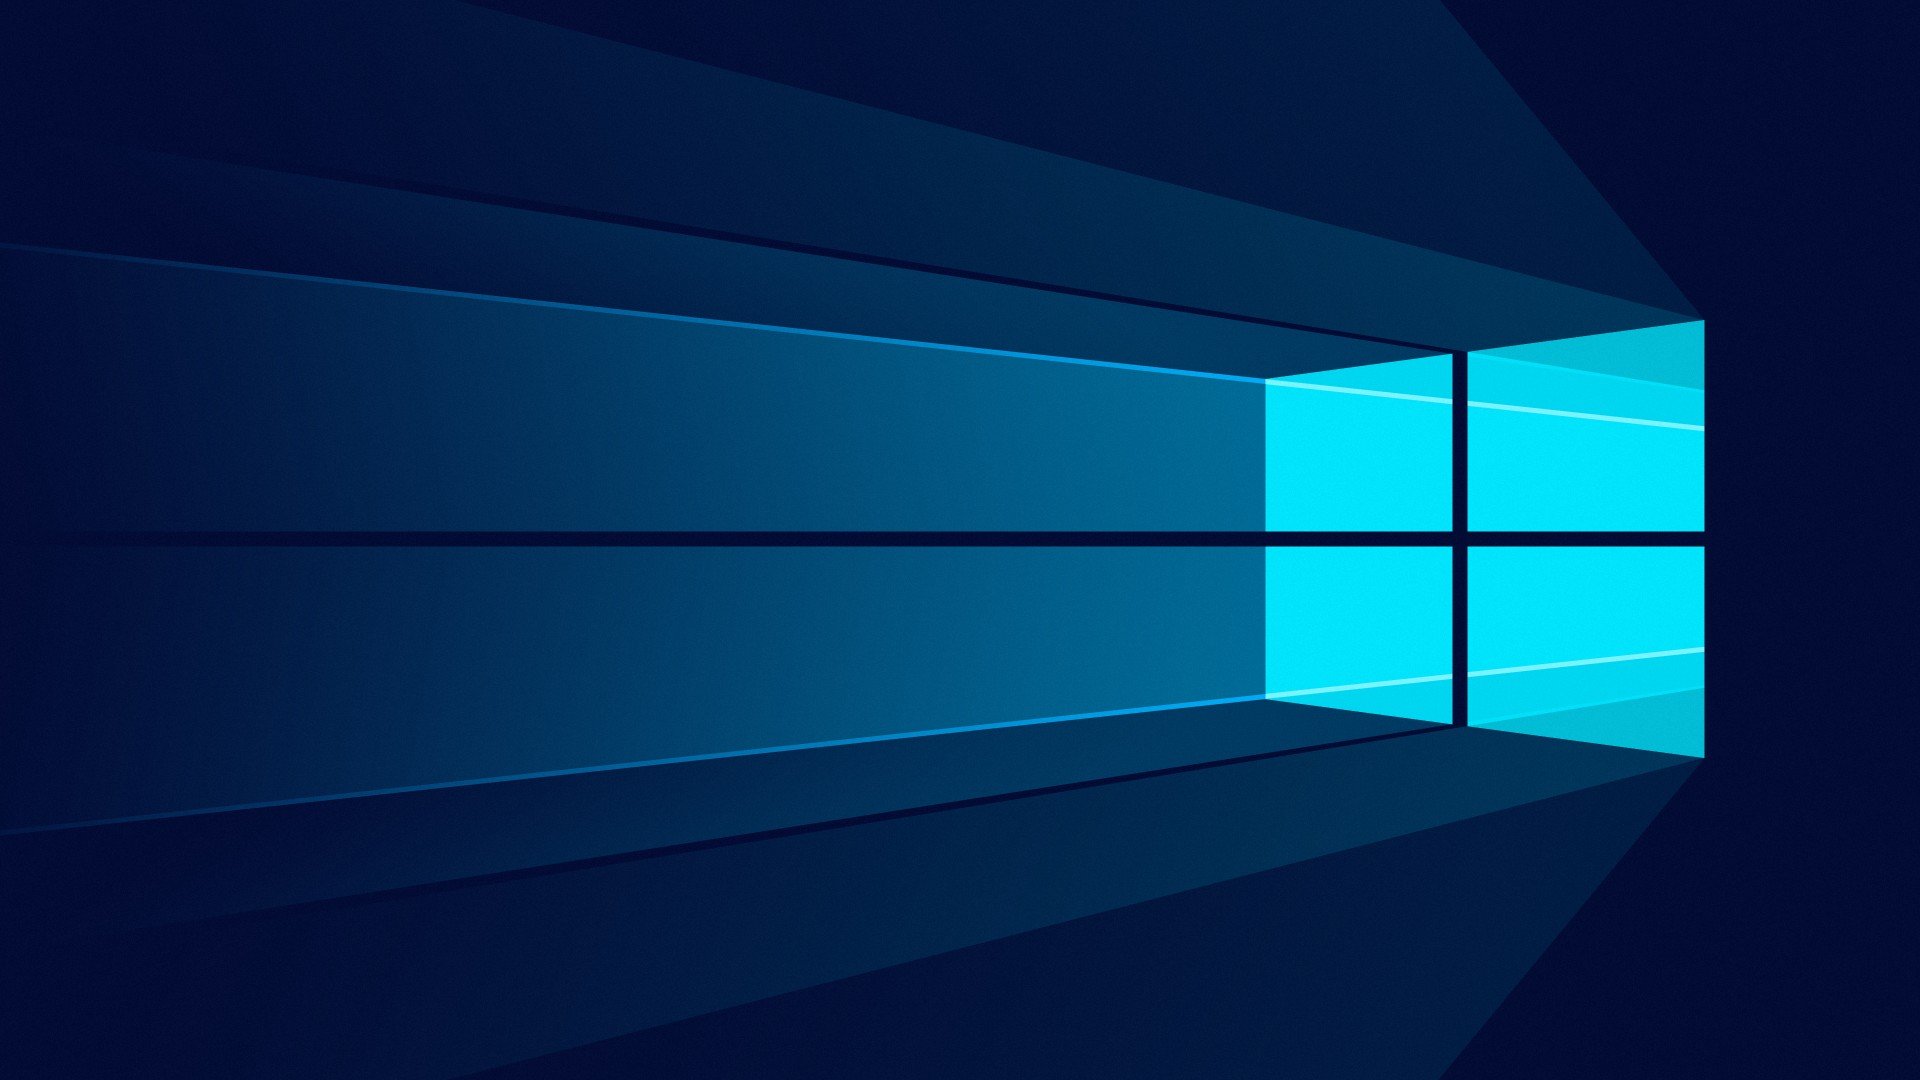  Windows  10  Minimalism Logo  HD  Wallpapers  Desktop and 